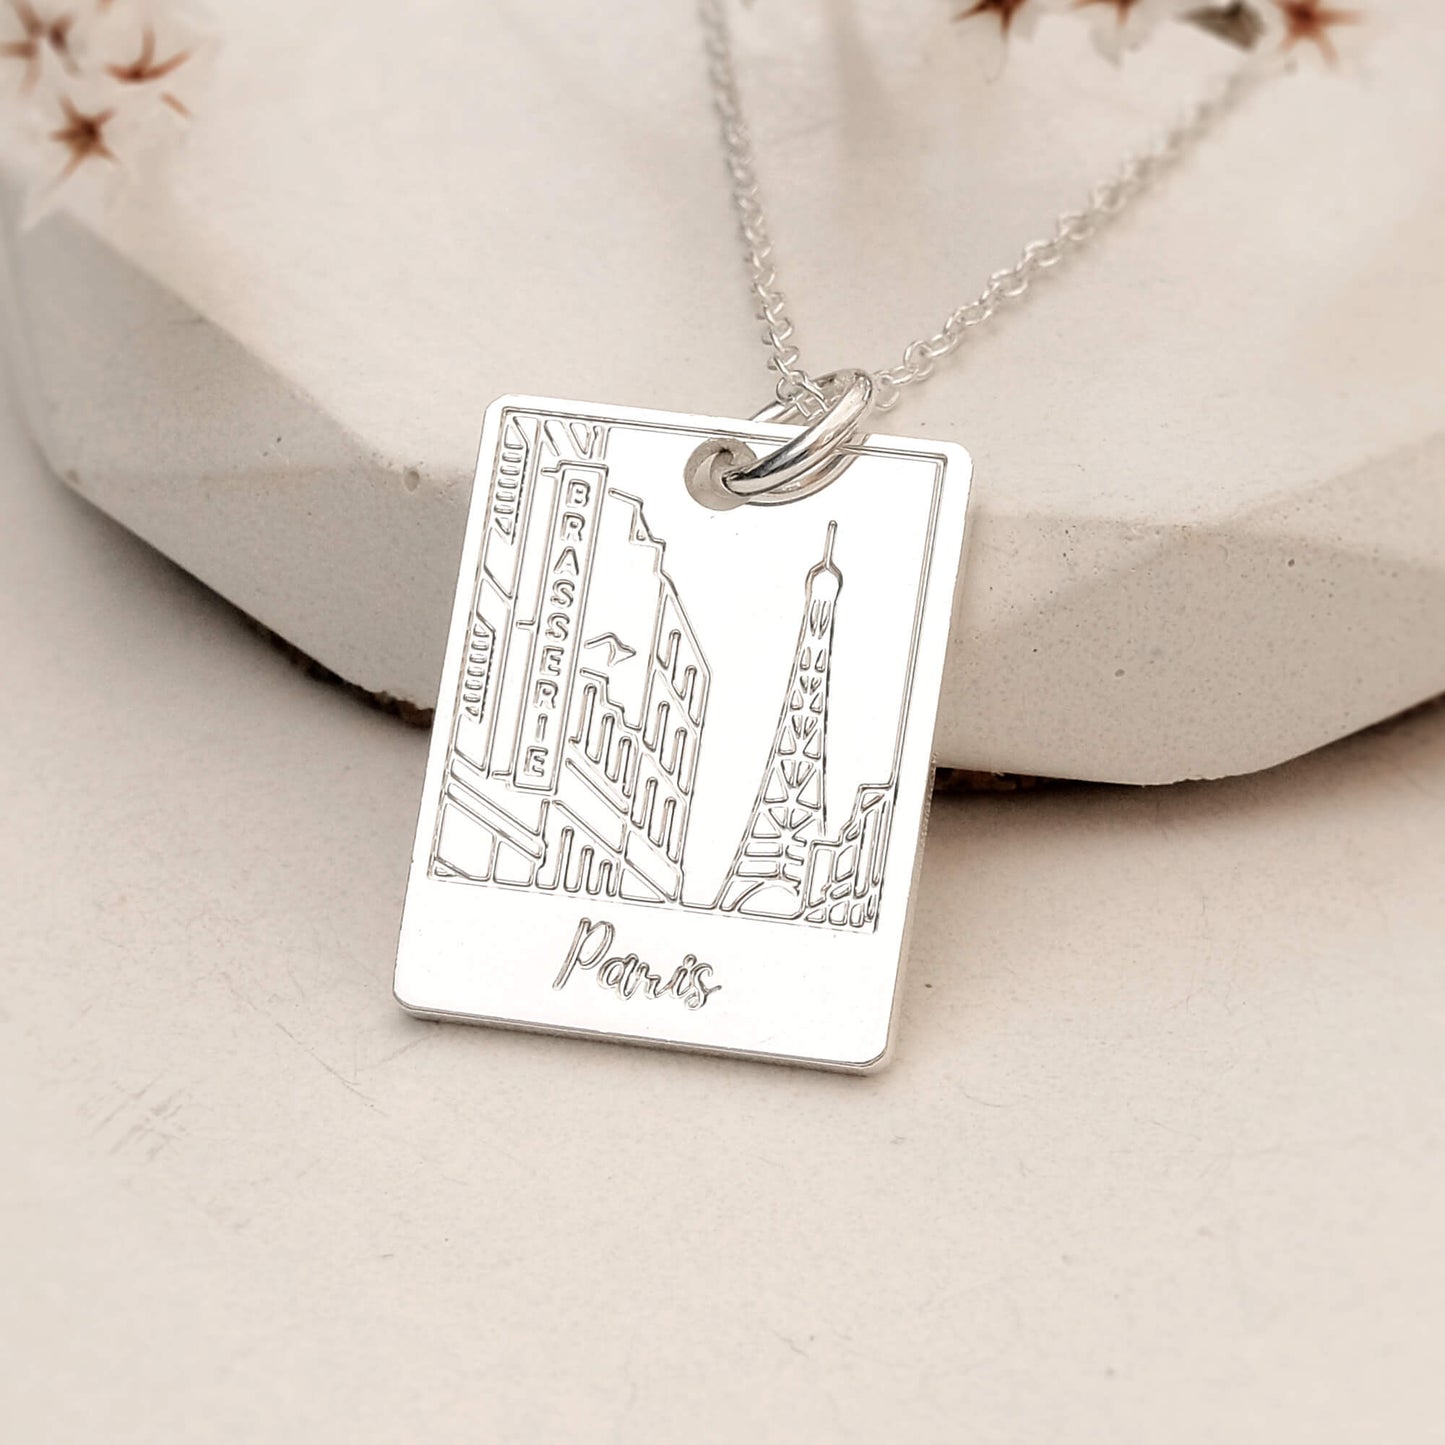 Paris Travel Necklace - Keepsake Travel Gift